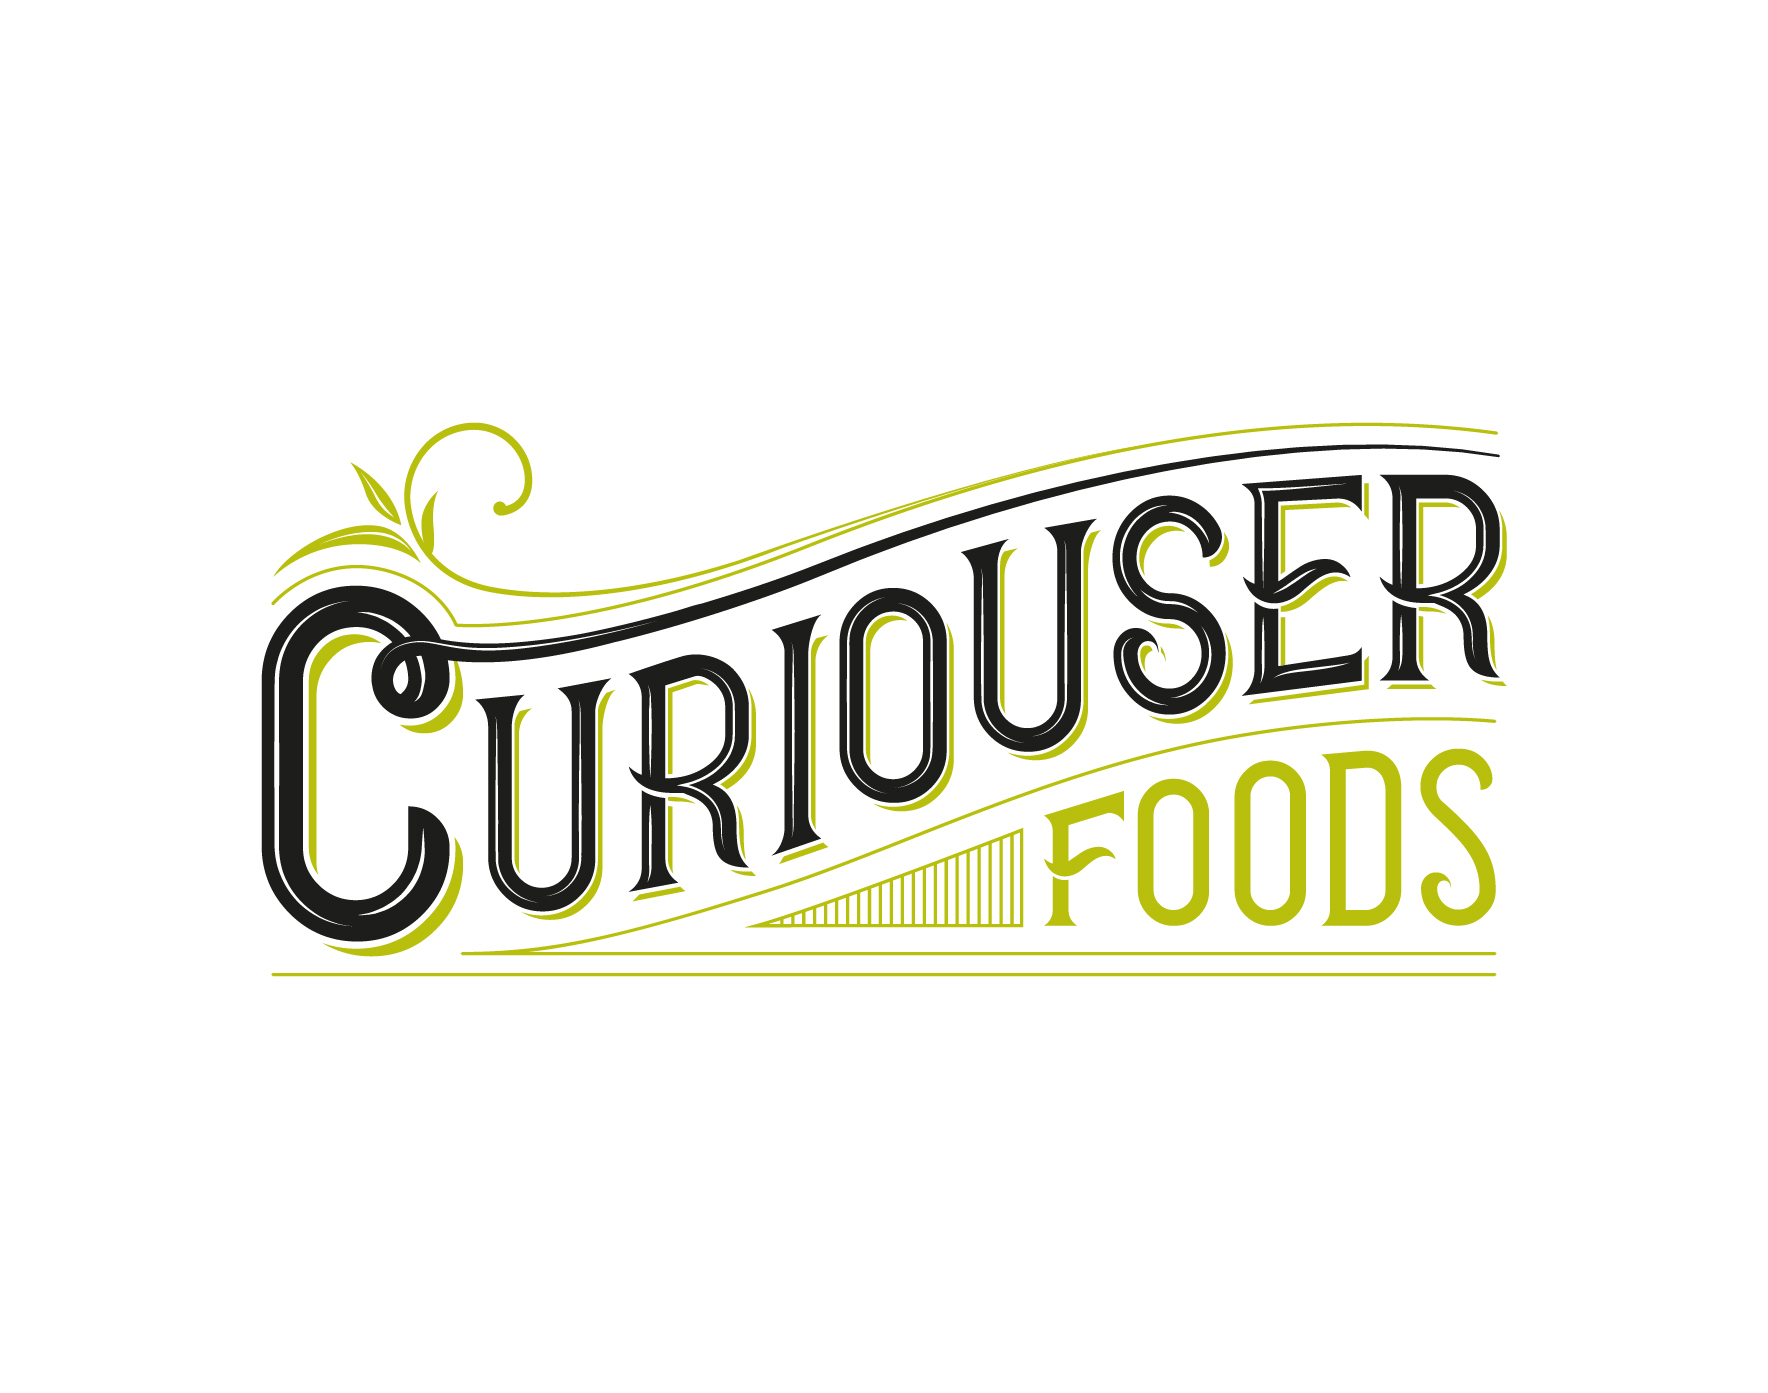 Curiouser logo white back1-01